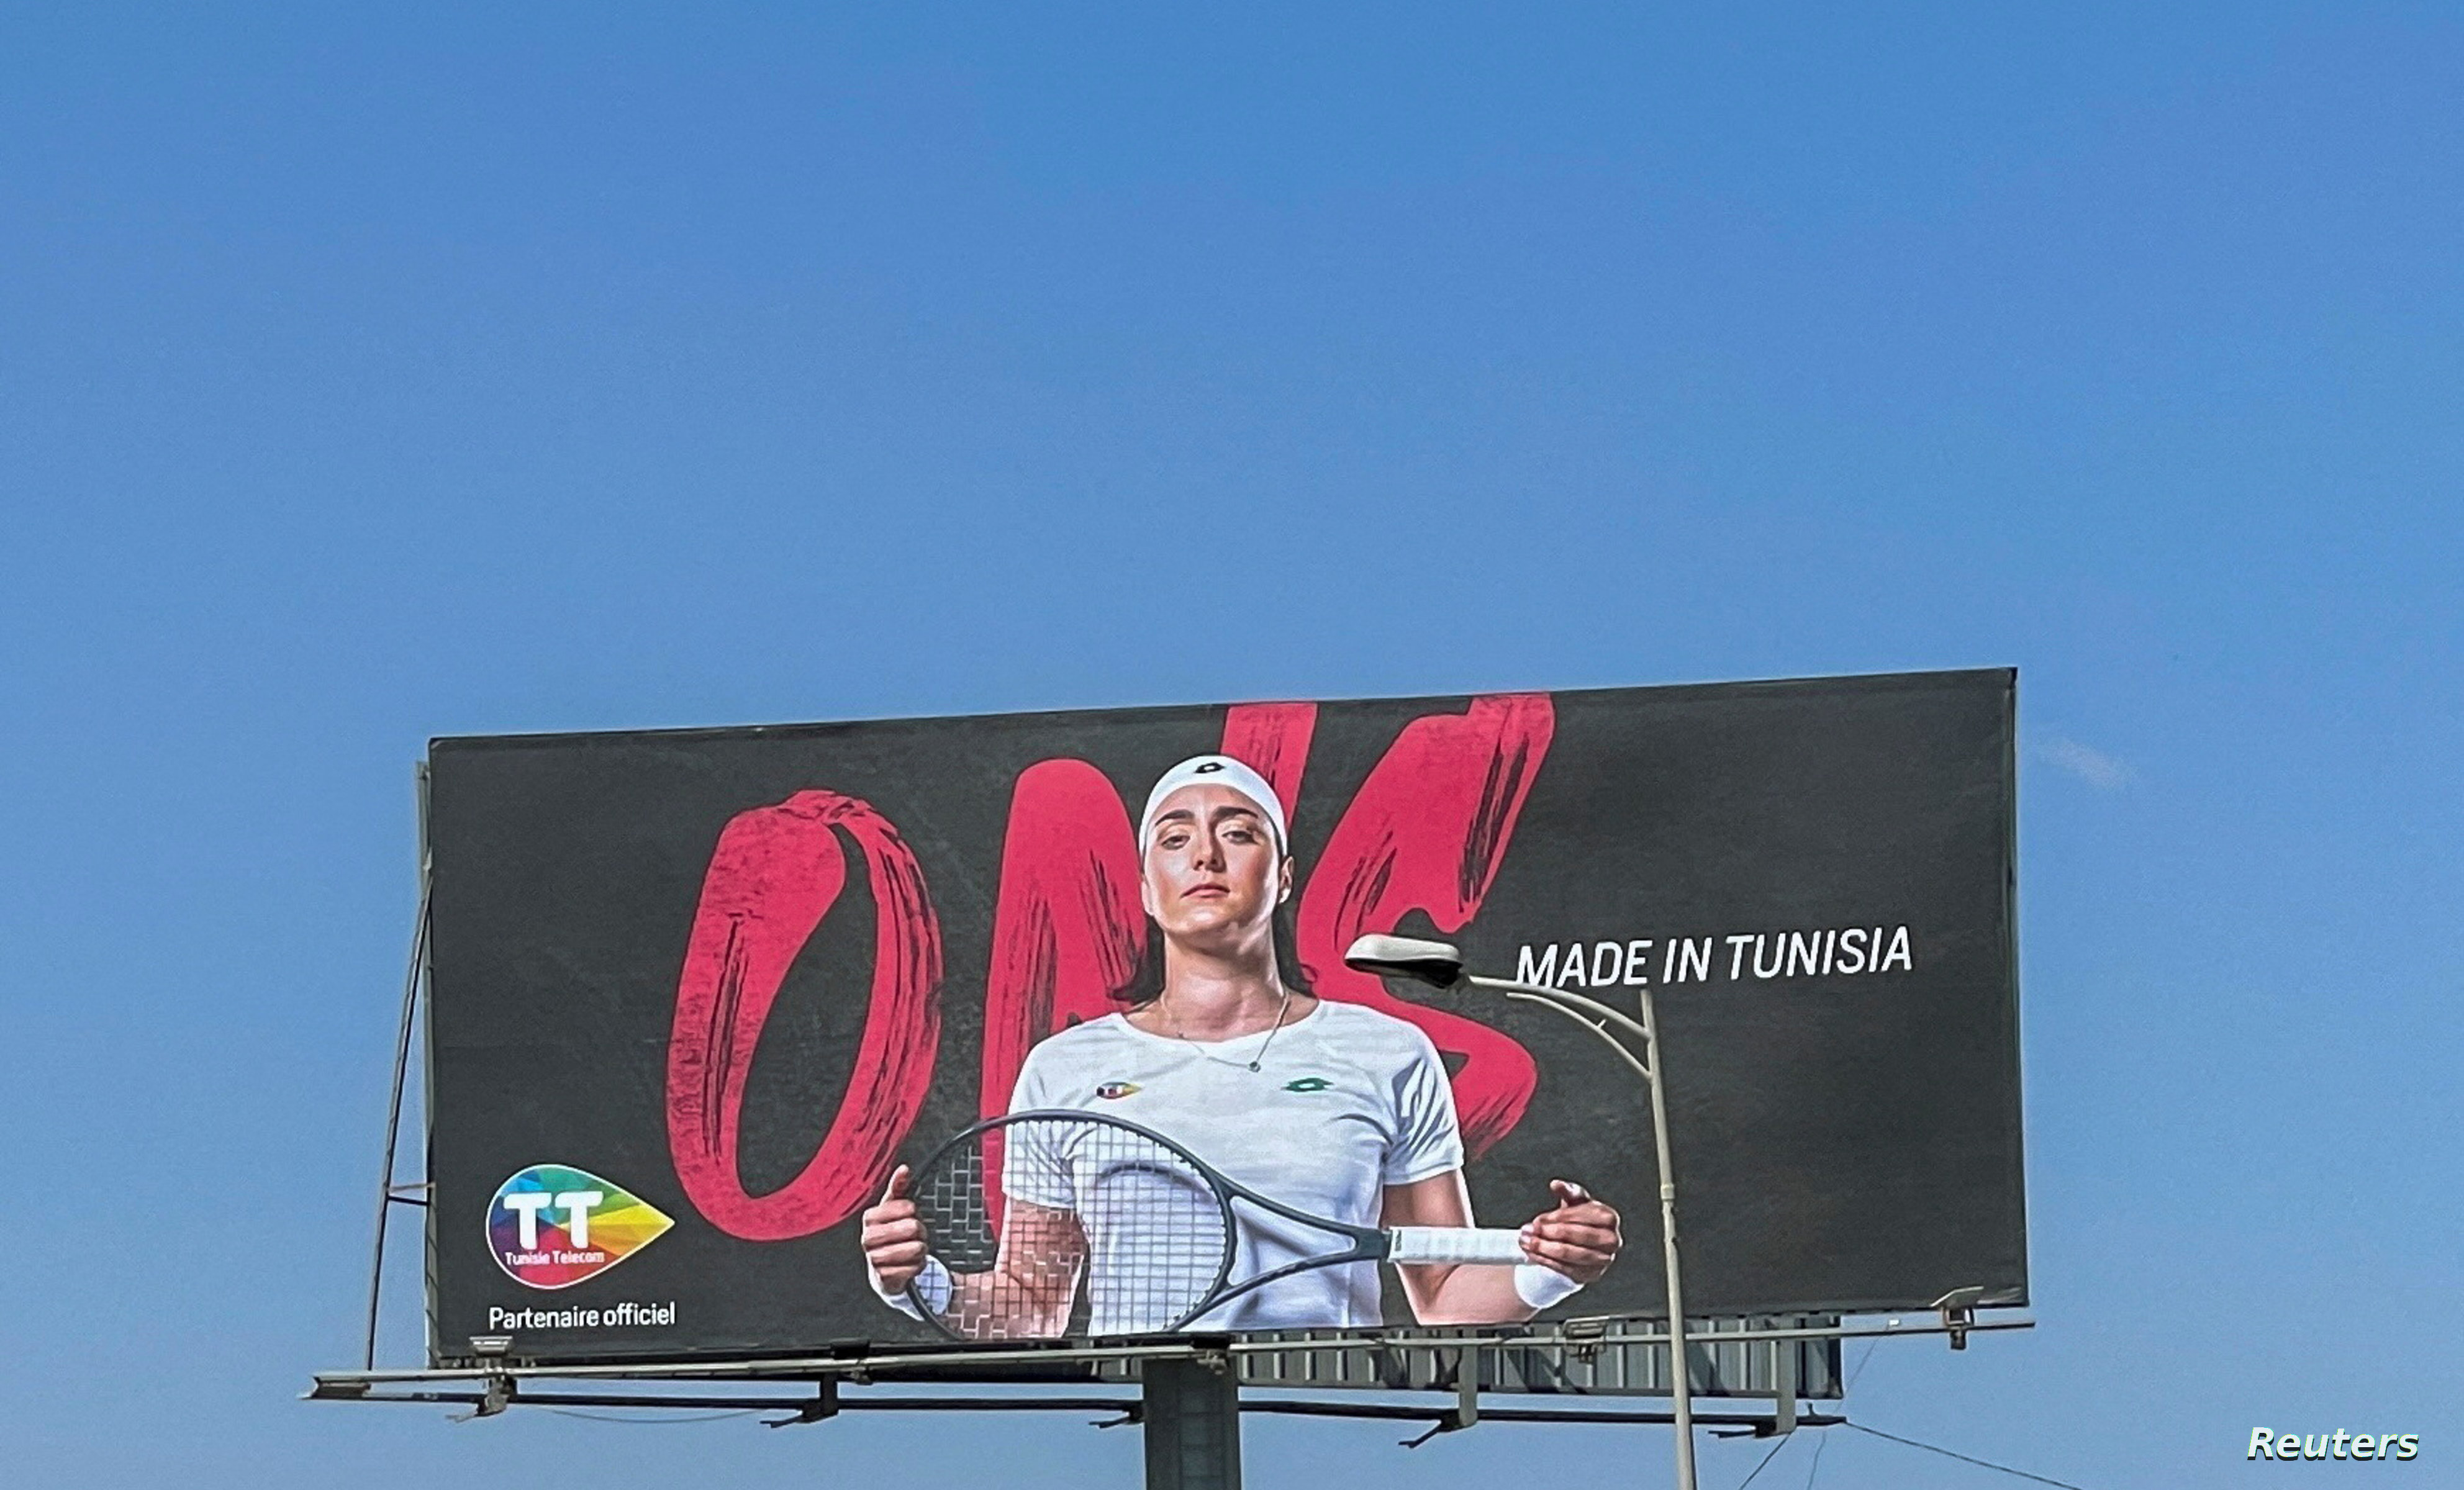 A billboard depicting Tunisian tennis player Anse Japier is seen on July 8, 2022 in Tunis, Tunisia.  REUTERS/Jihed Abidellaoui